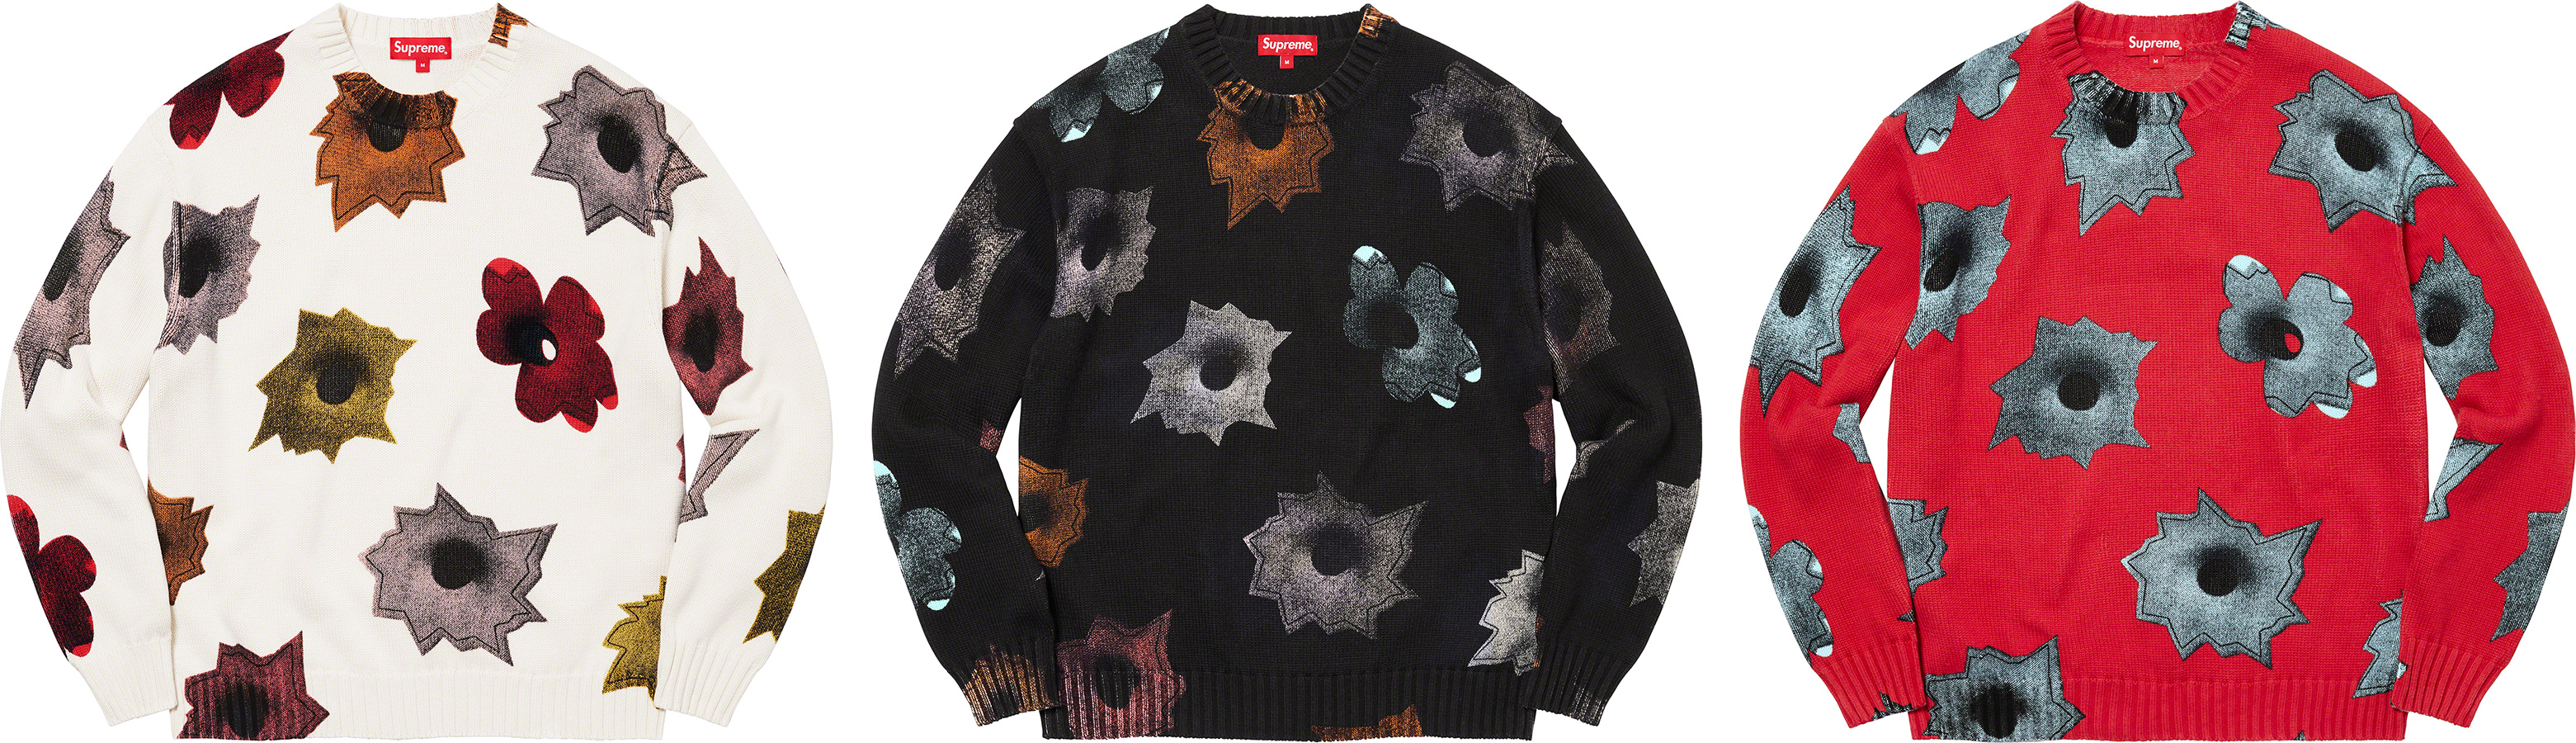 Supreme Nate Lowman Cotton Sweater Black-